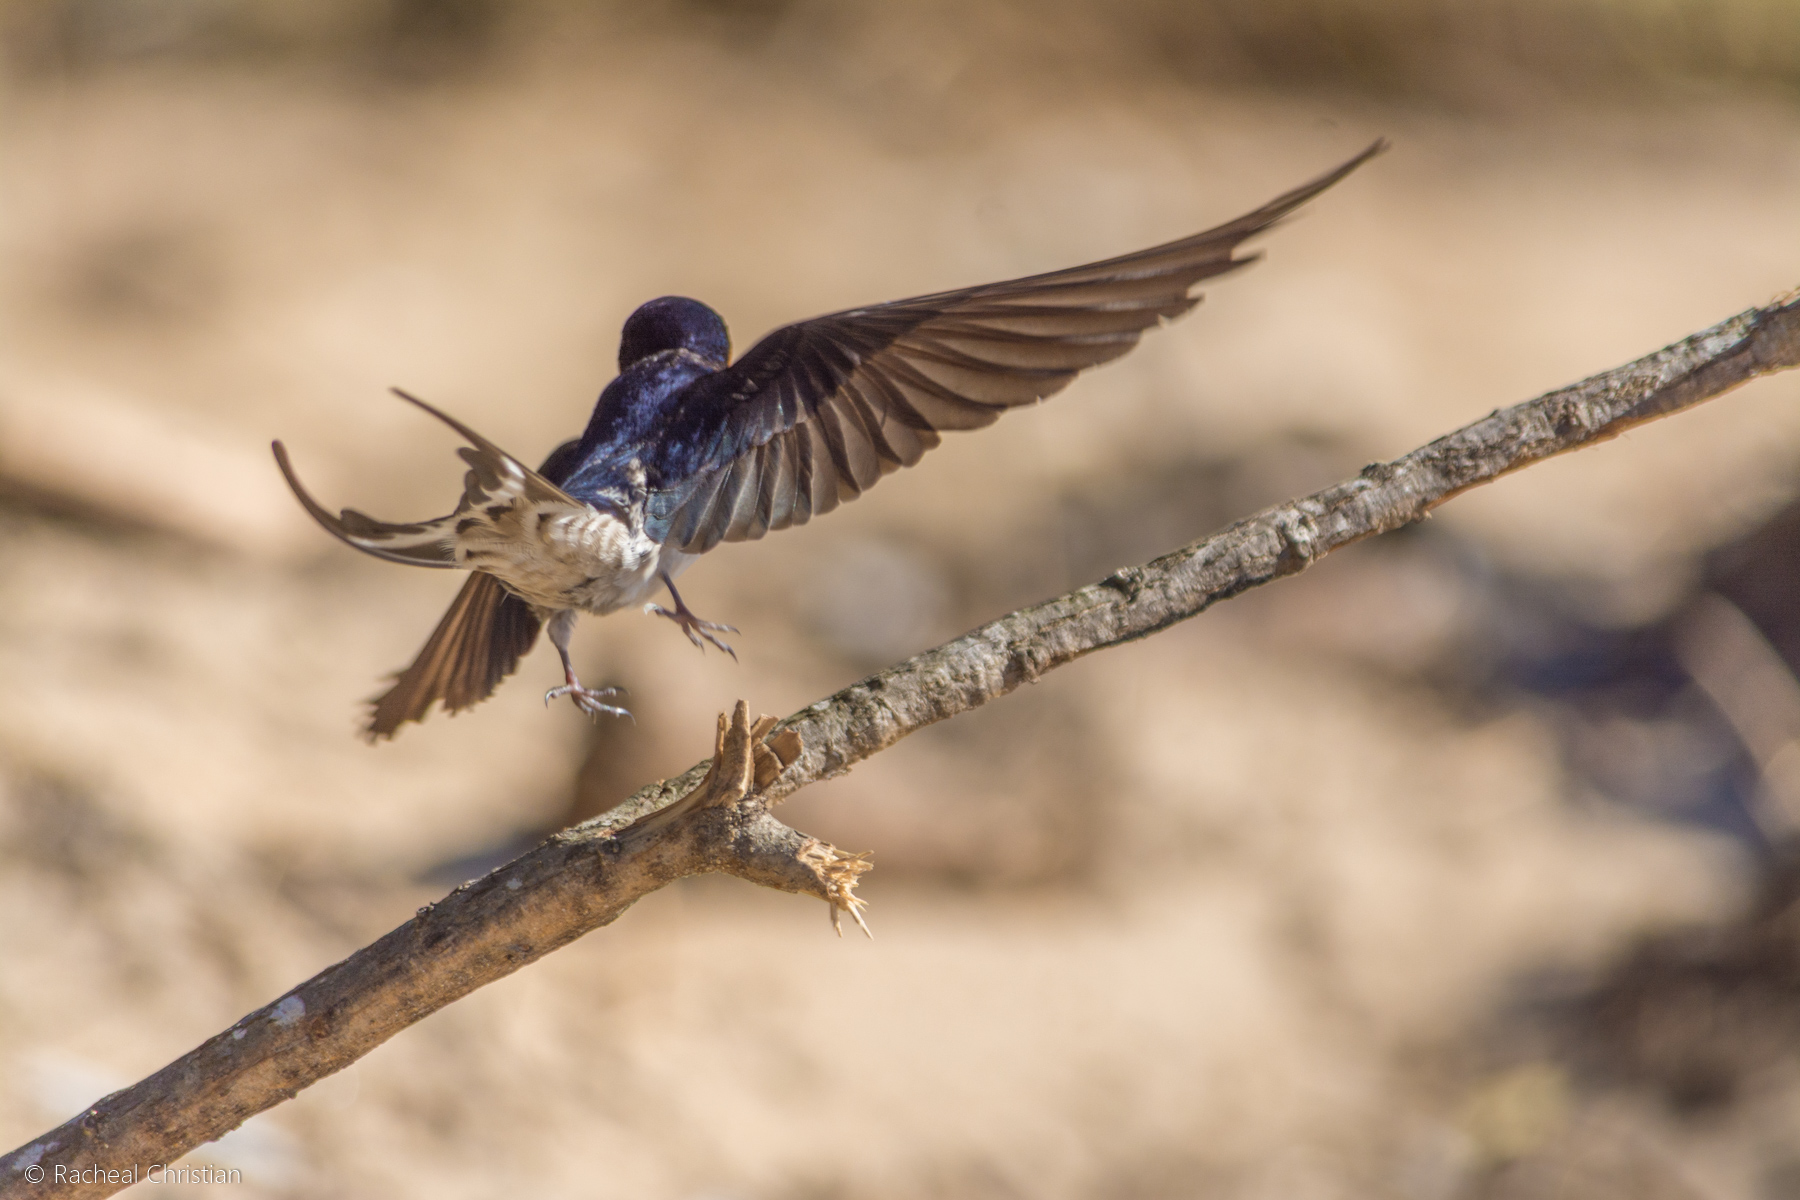 Bird Photos: Welcome Swallow, Hirundon neoxena. Photography by Racheal Christian rachealchristianphotography.com